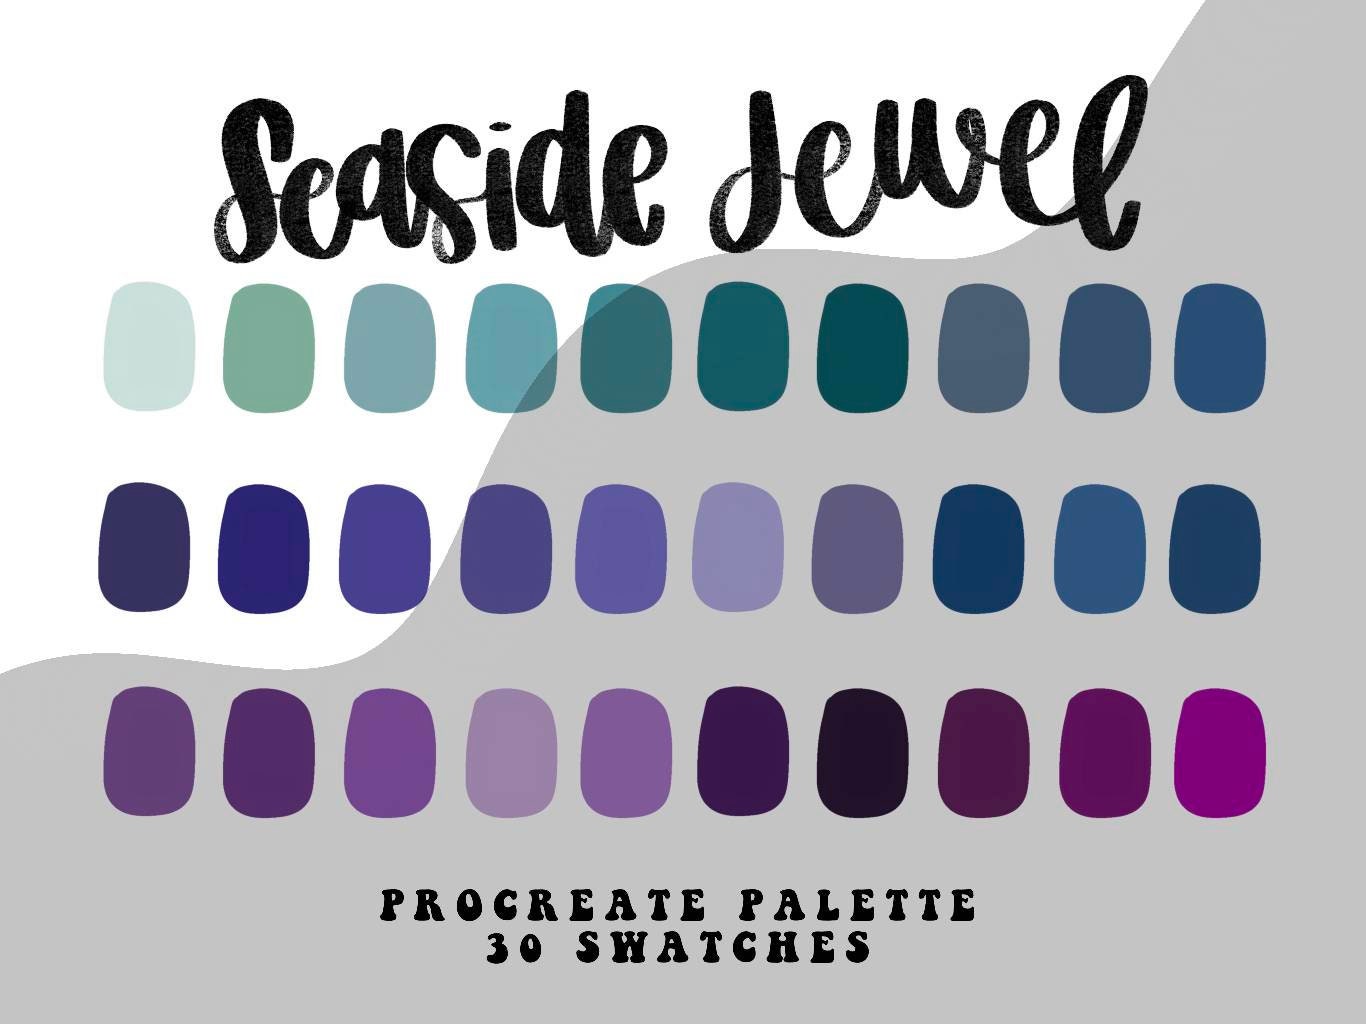 Seaside jewel procreate palette/procreate/instant download | Etsy